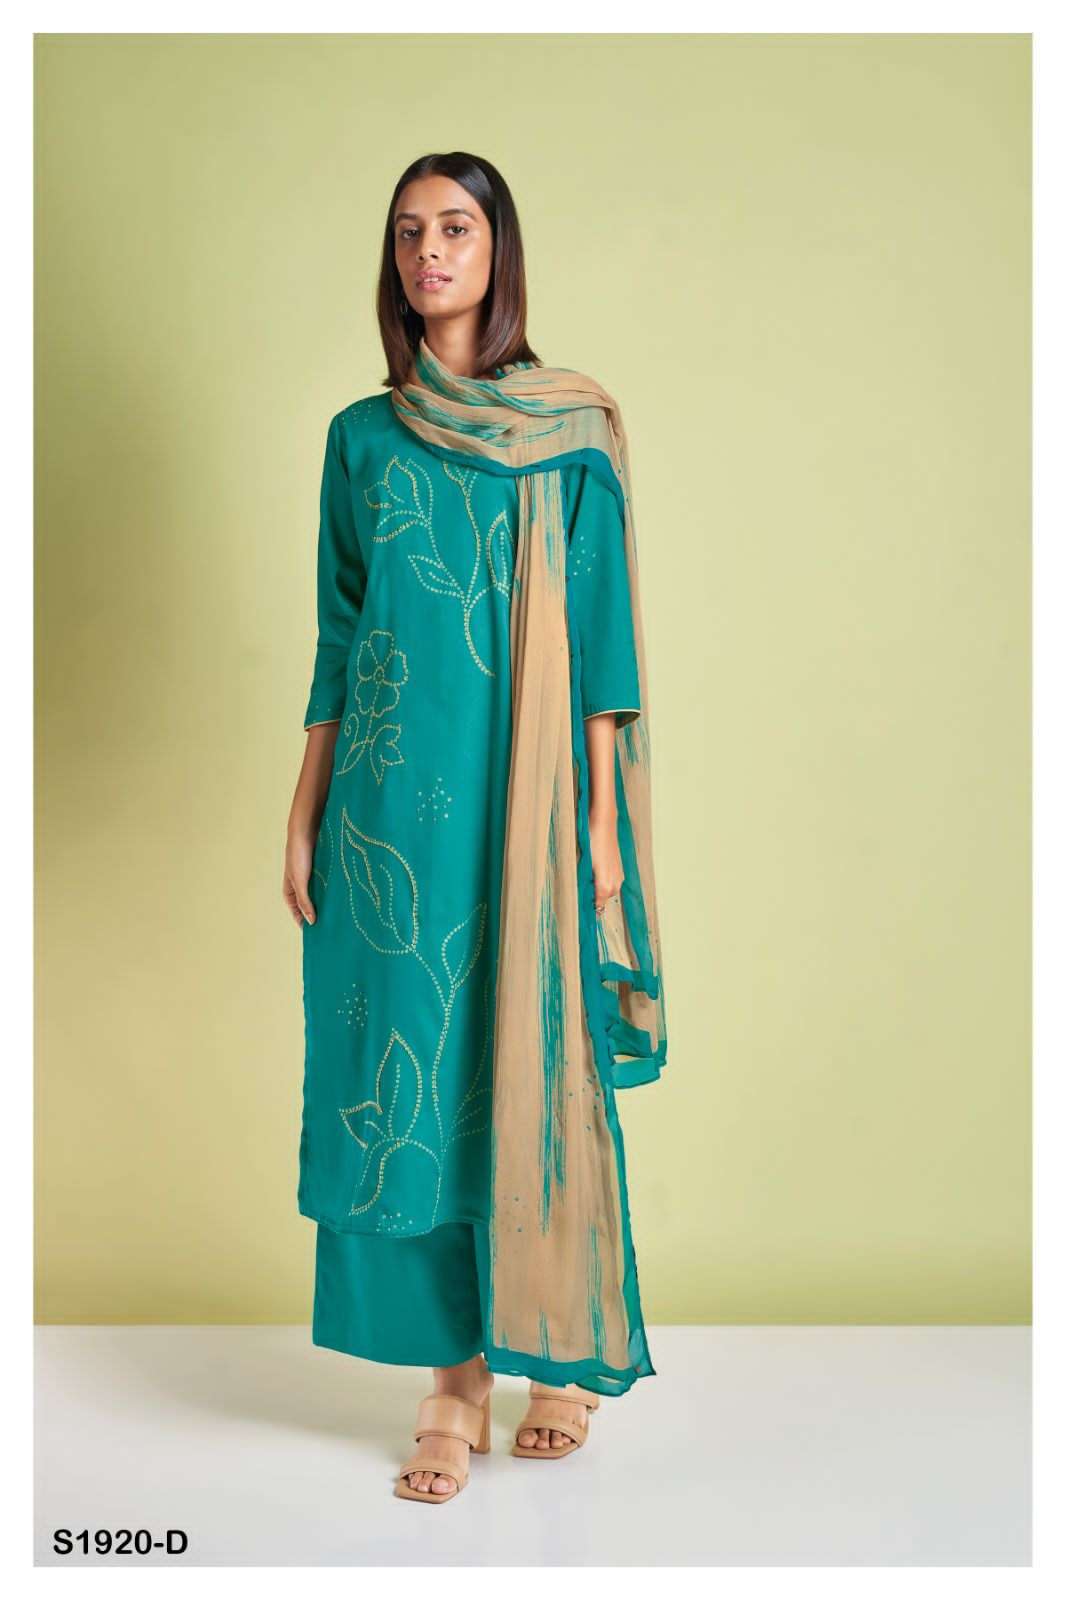 ganga lillian 1920 colour series designer latest wedding salwar kameez wholesaler surat gujarat